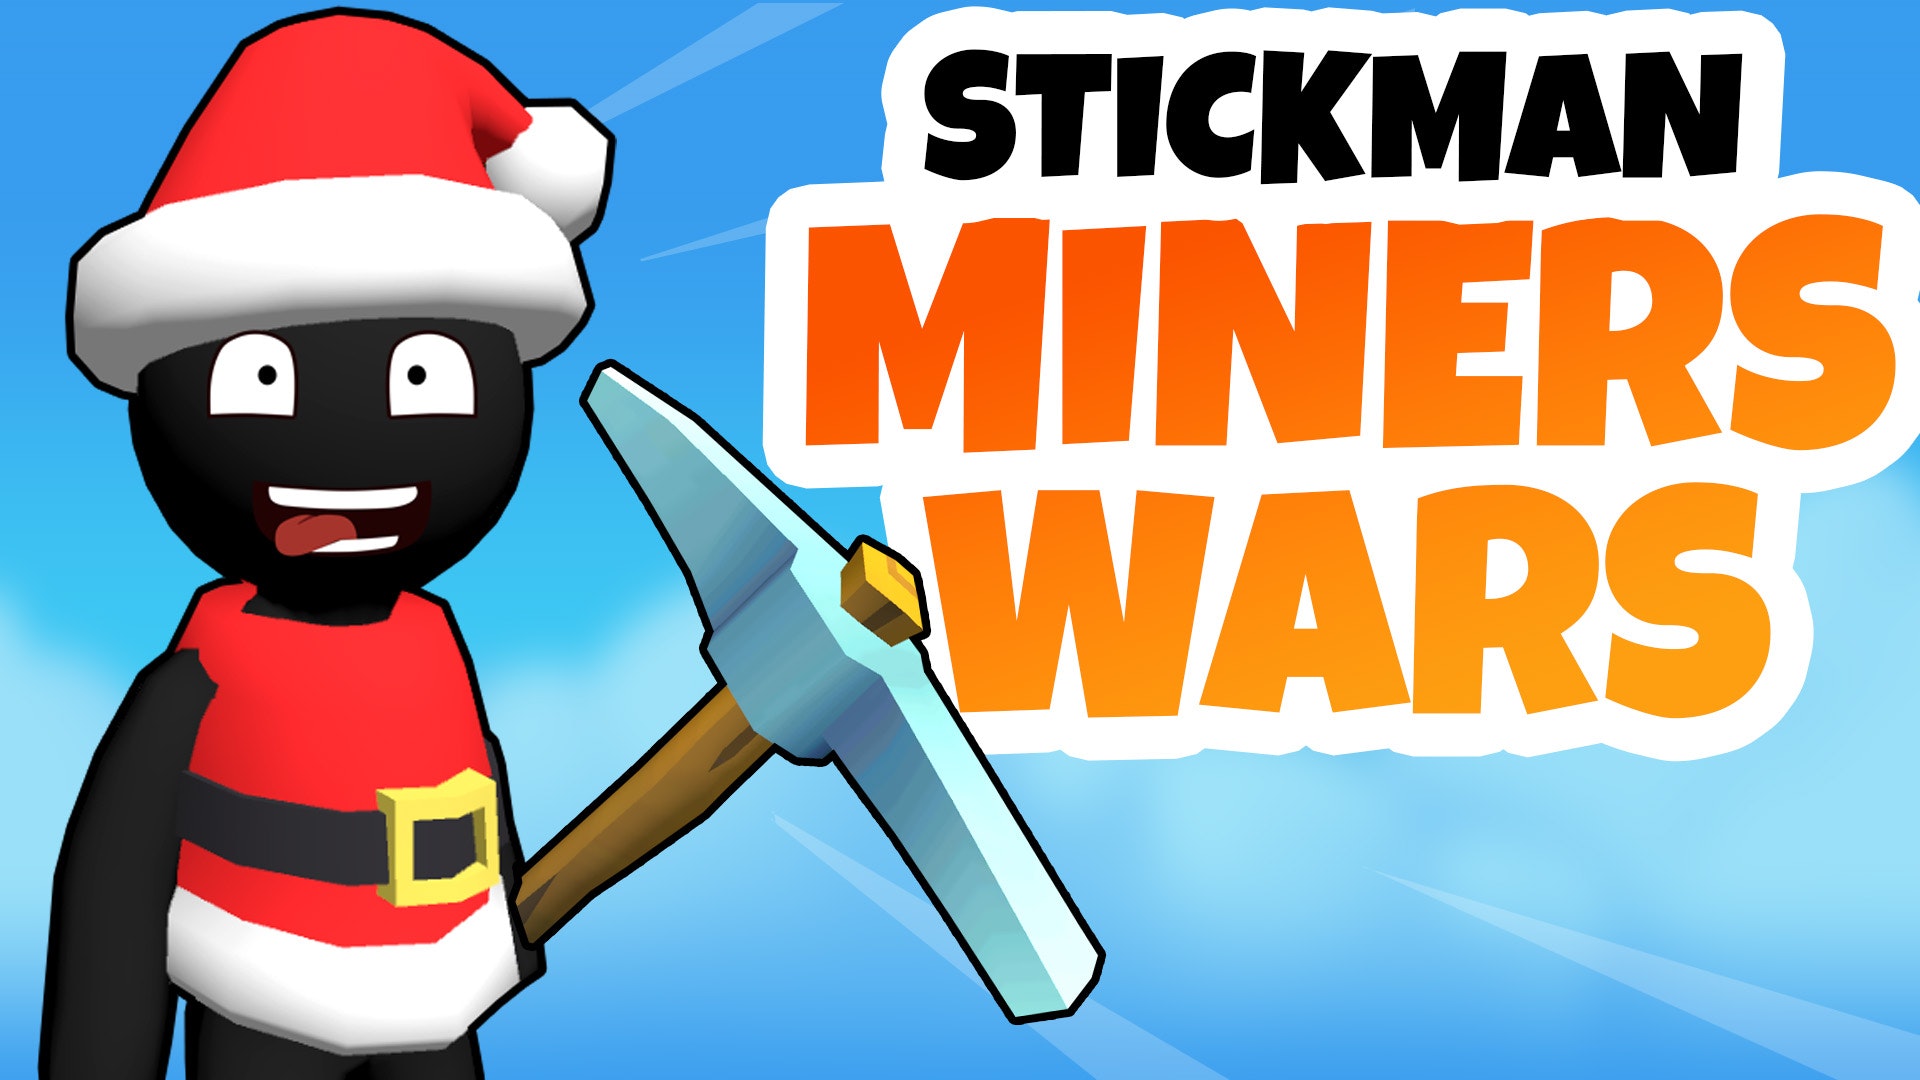 Stickman Meme Battle Simulator  Stick War Army Invasion - Android GamePlay  2018 